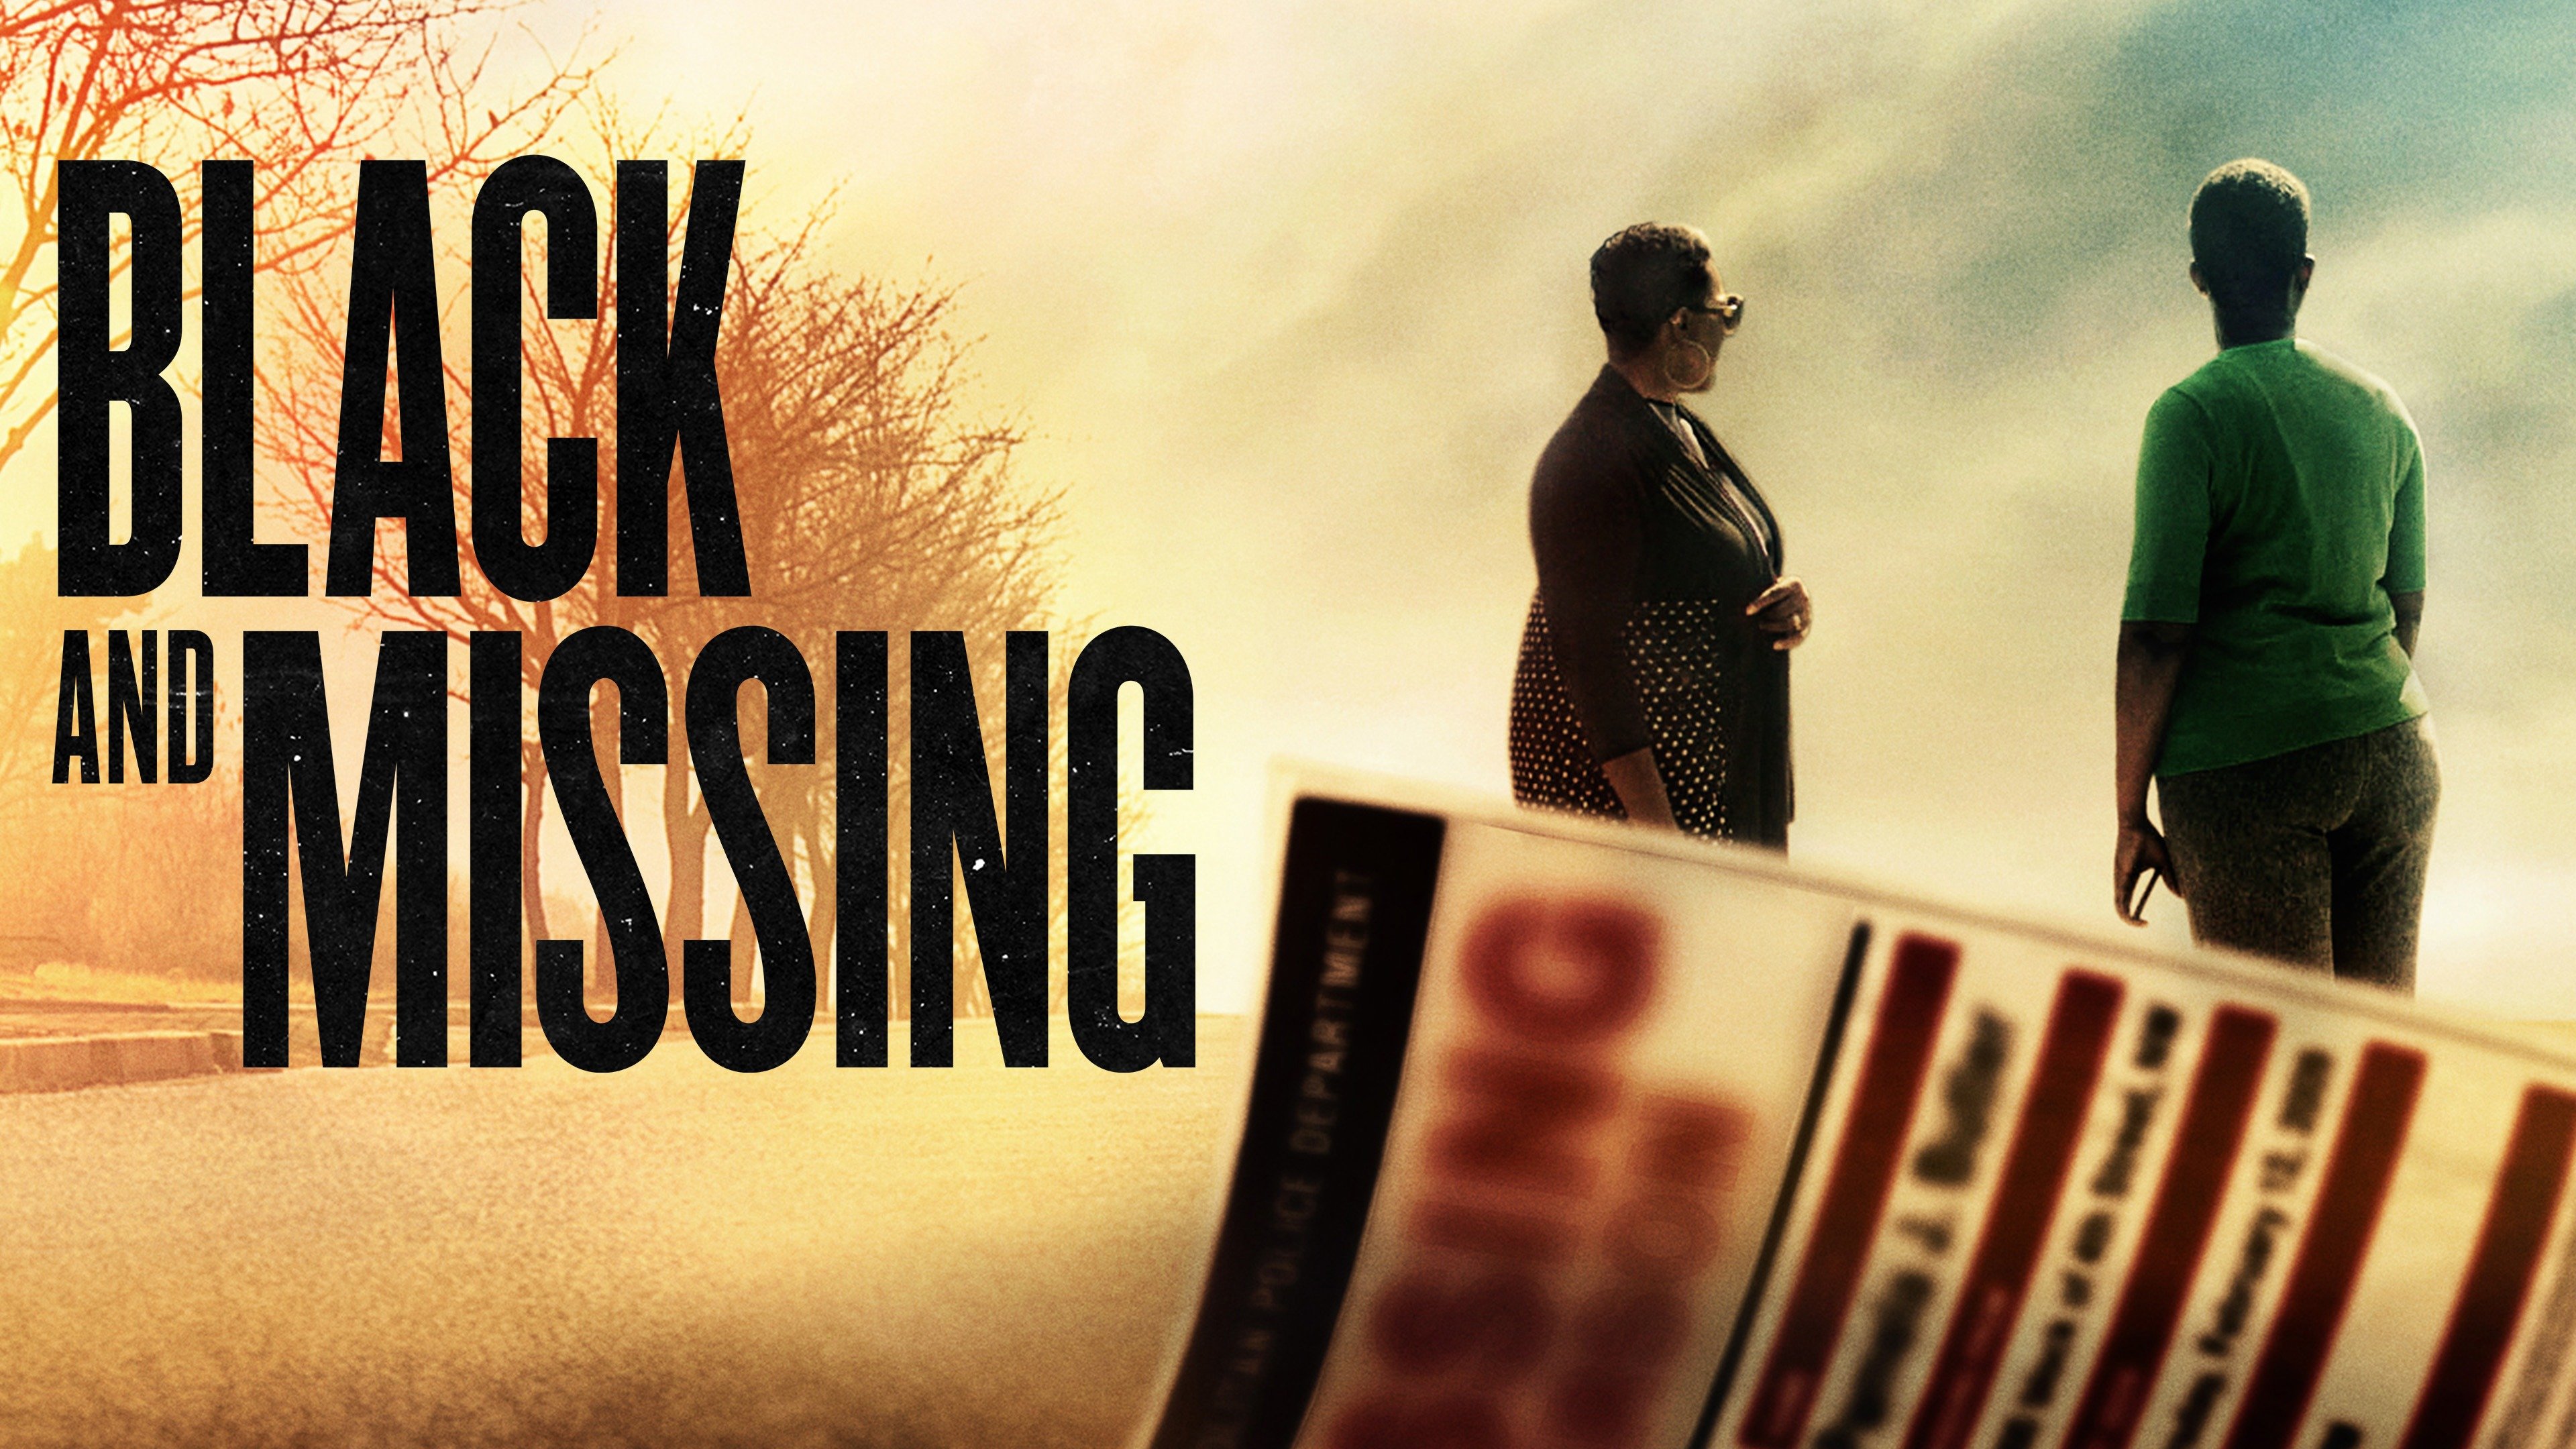 "Black and Missing: Season 1 photo 4"